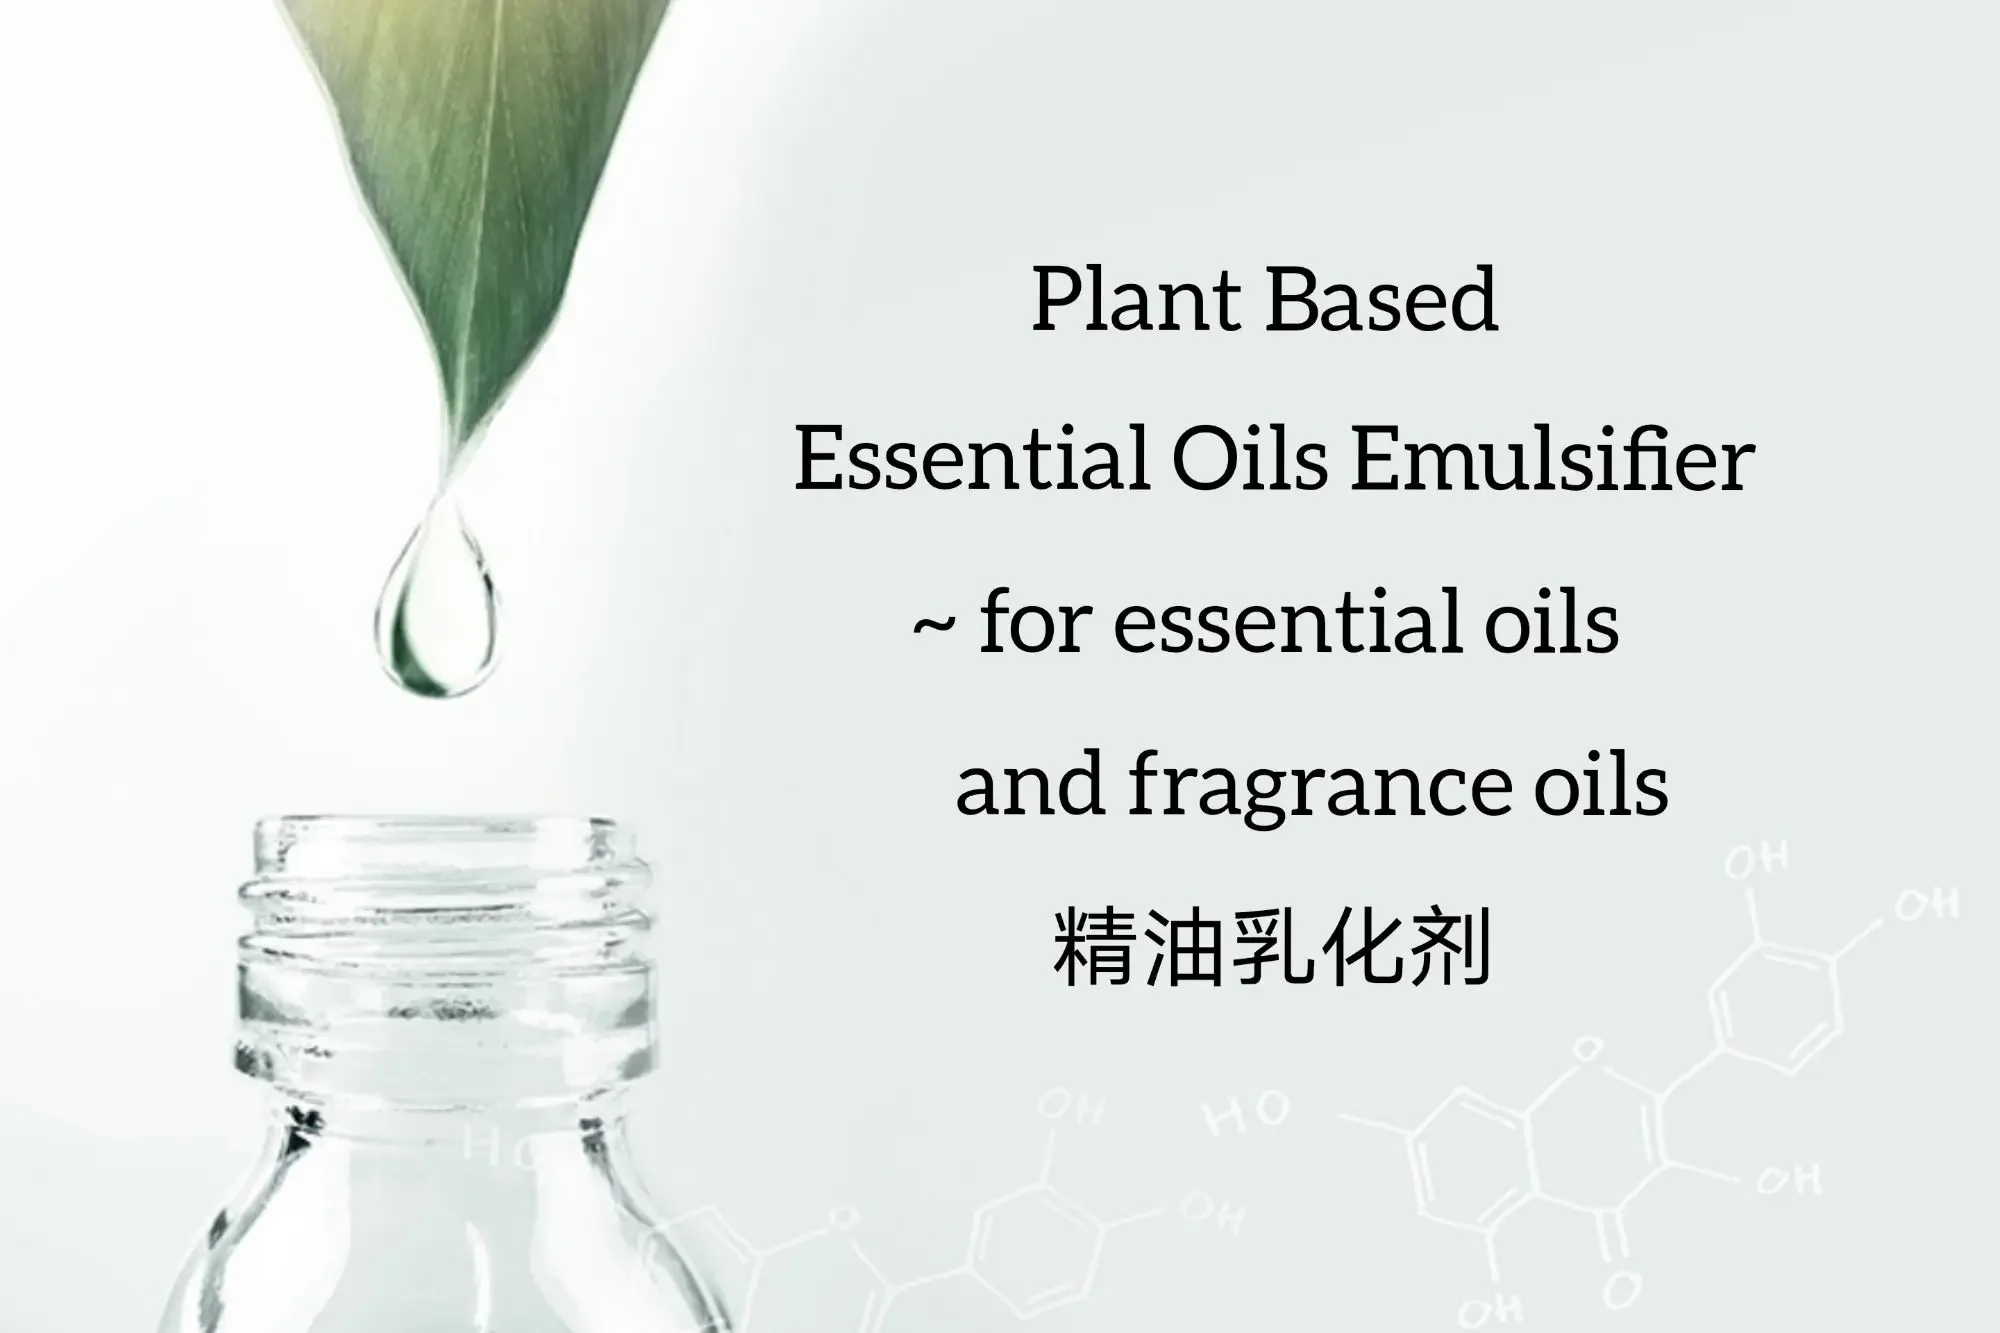 Essential Oil Emulsifier - Plant Based 精油乳化剂 50gm